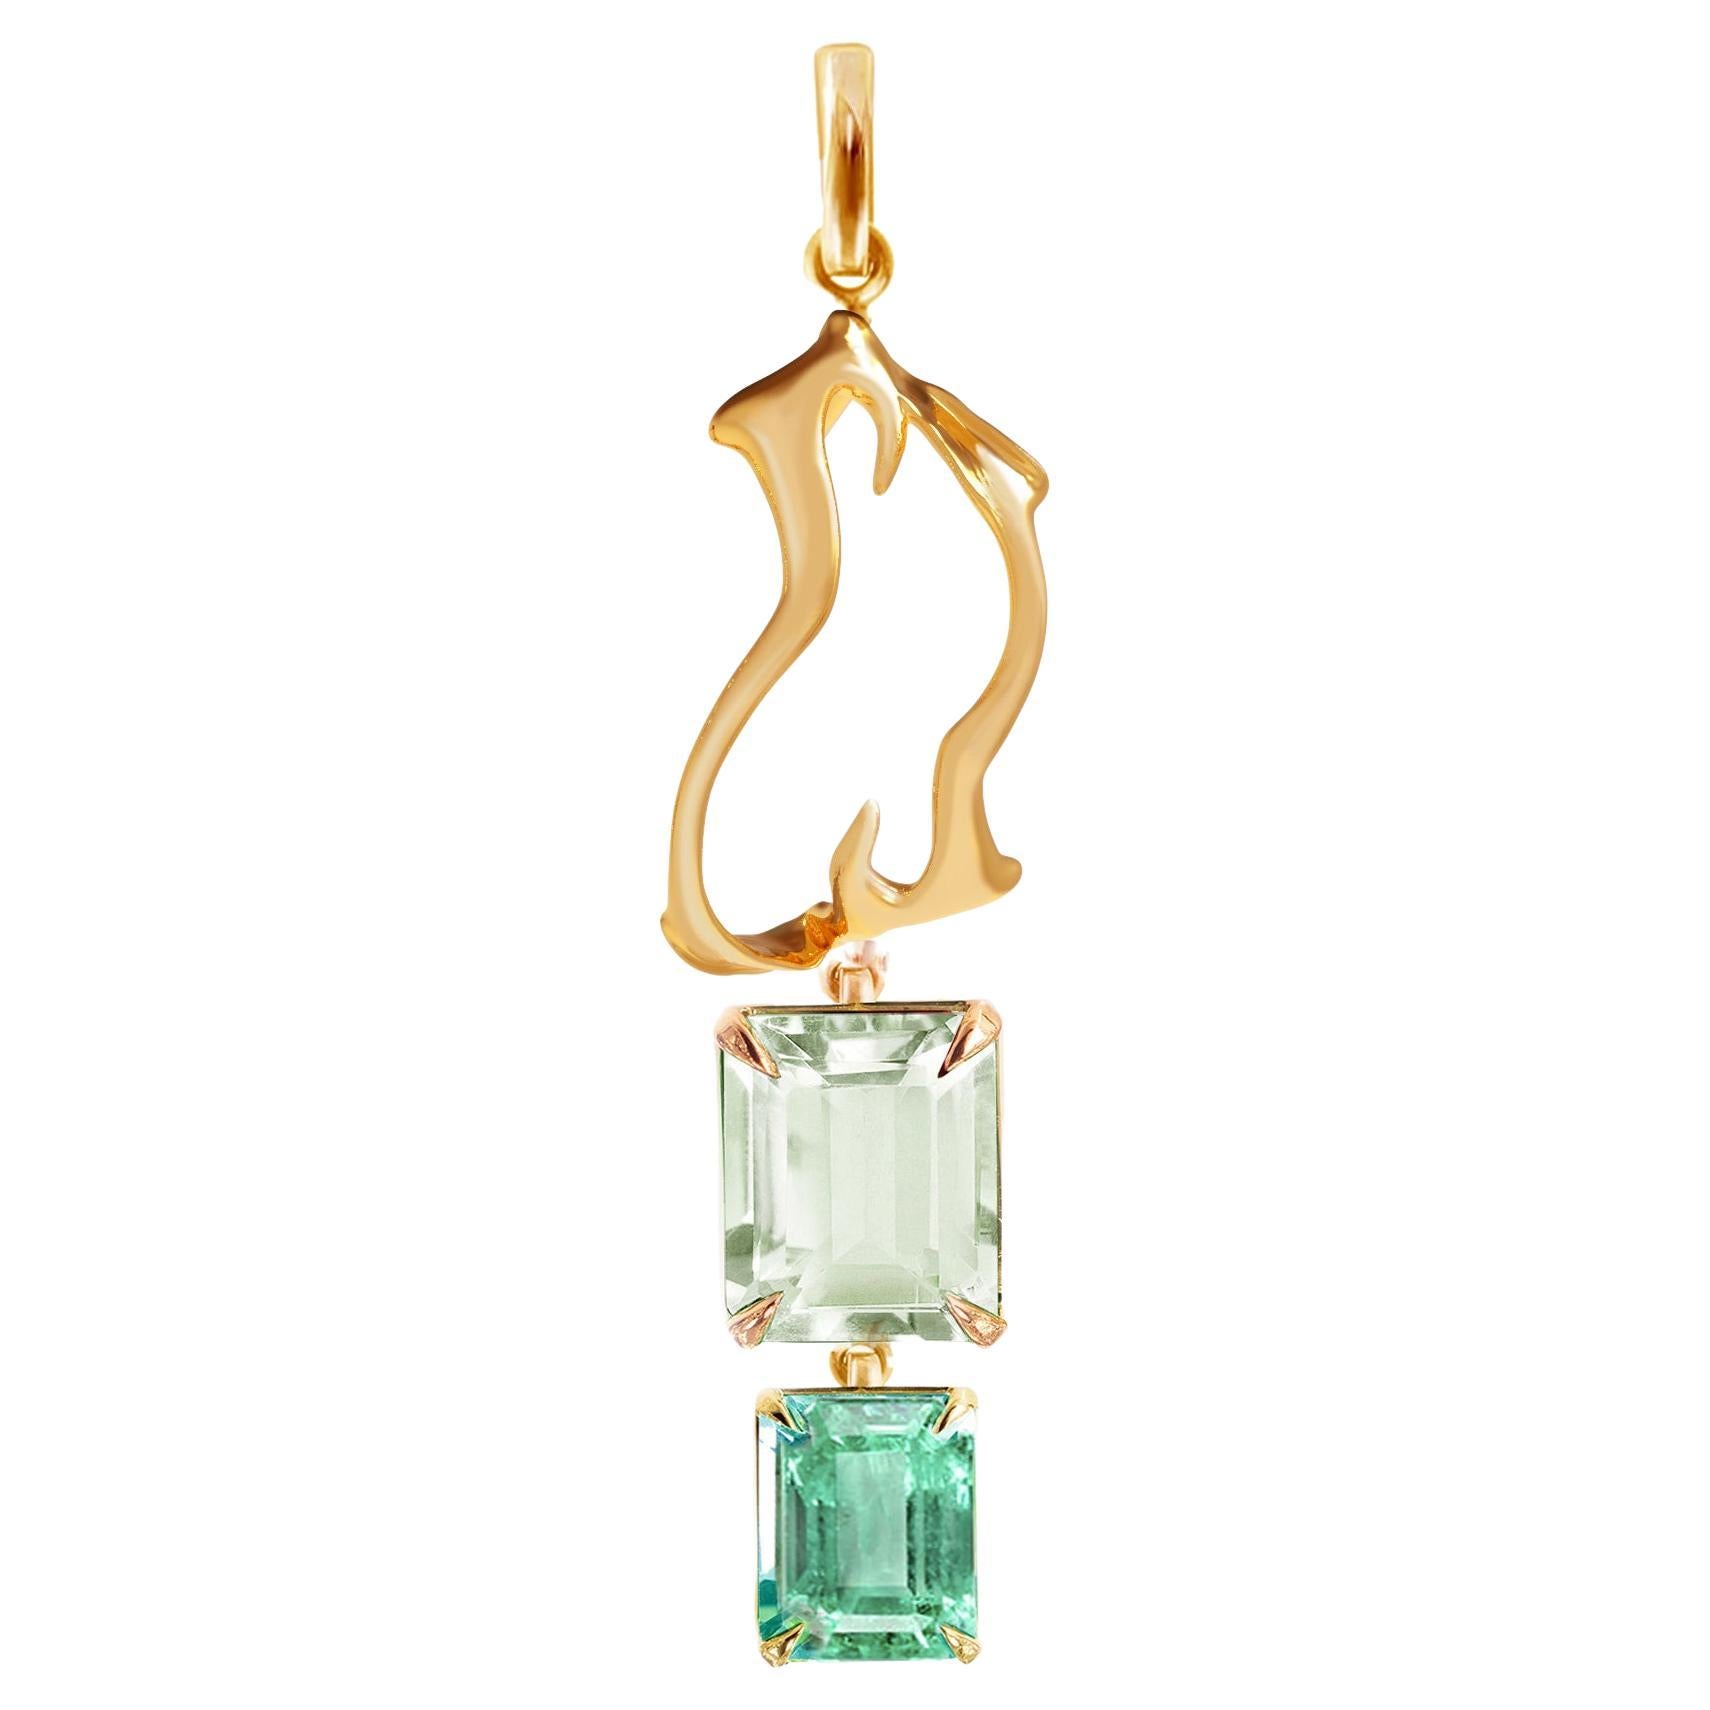 18 Karat Yellow Gold Tibetan Drop Pendant Necklace with Detachable Green Emerald For Sale